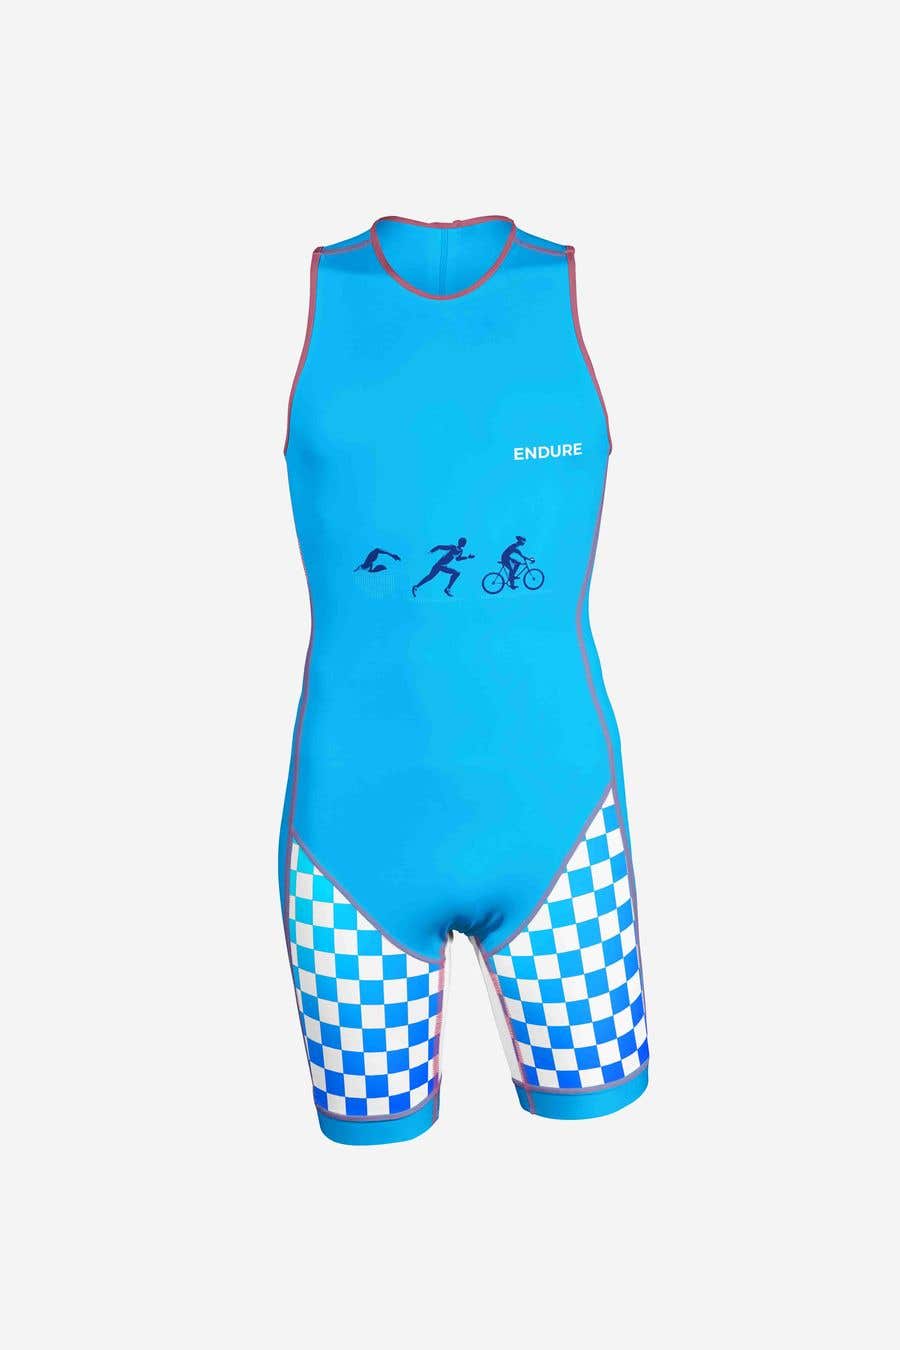 Kandidatura #27për                                                 designing a triathlon "kit" (1 piece suit)
                                            